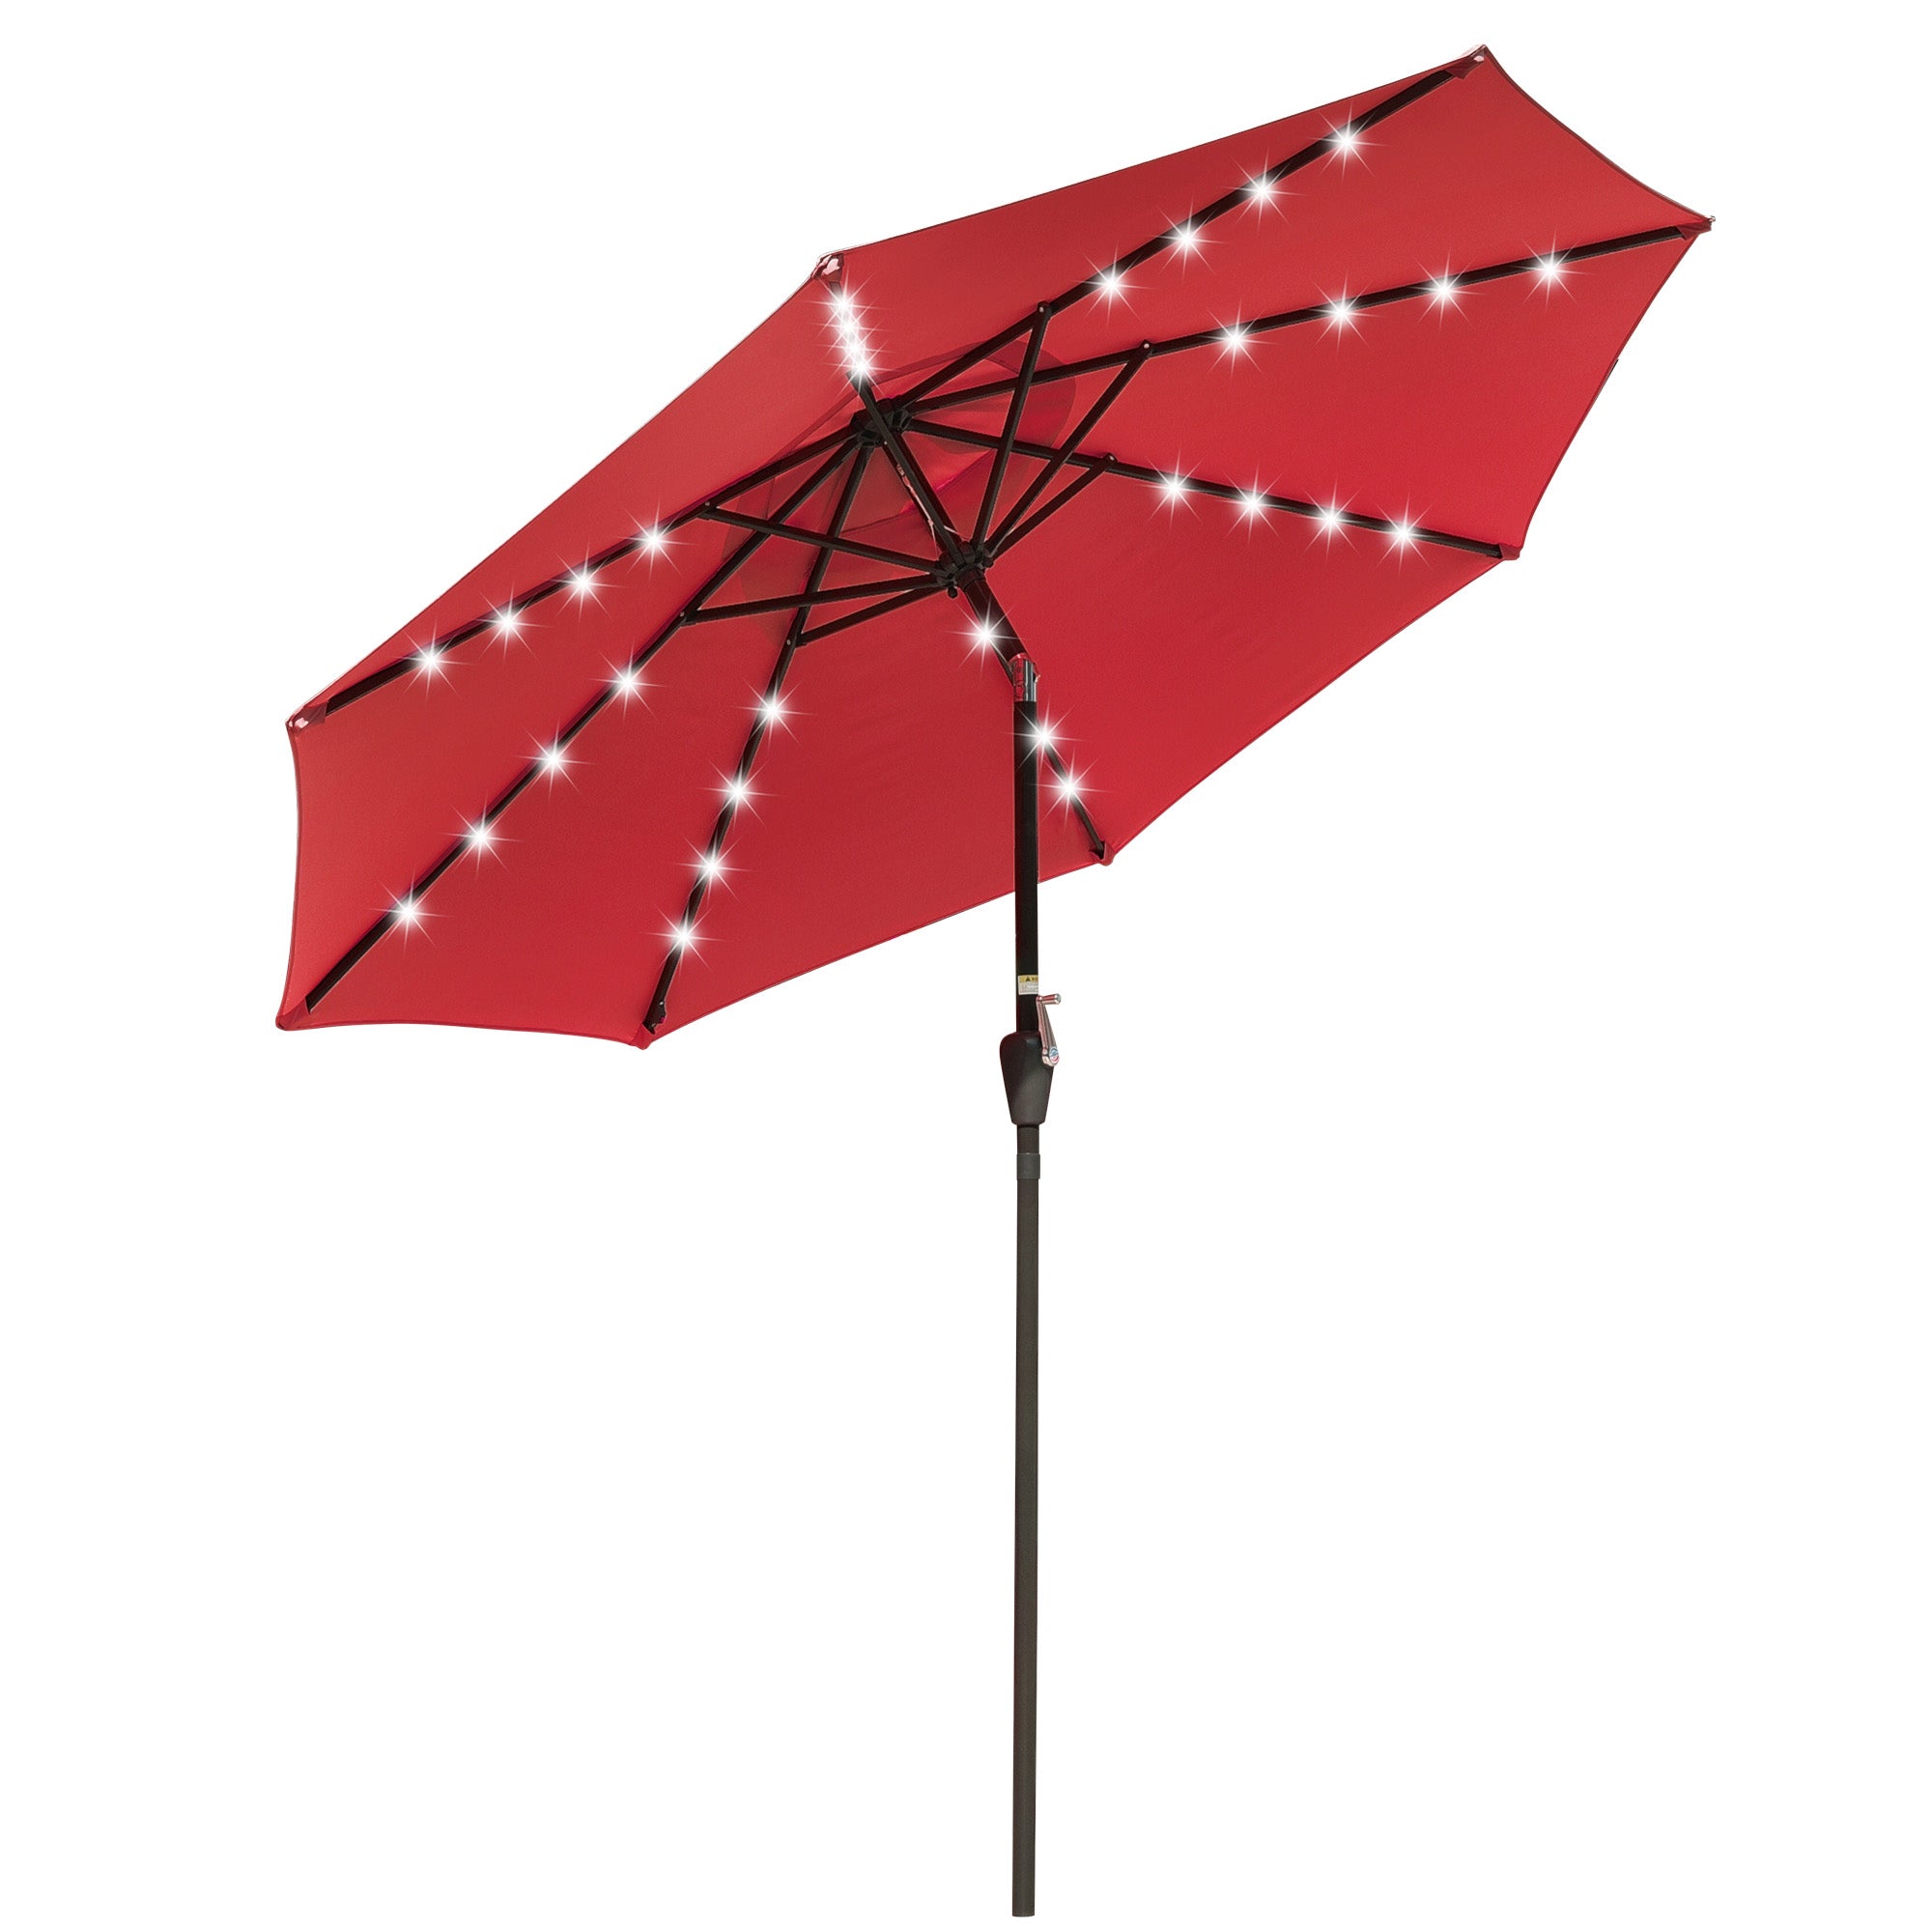 LAGarden 9Ft LED Lighted Patio Market Umbrella Outdoor Solar Powered Table Umbrella 8 Ribs 32 Lights UV30 Red